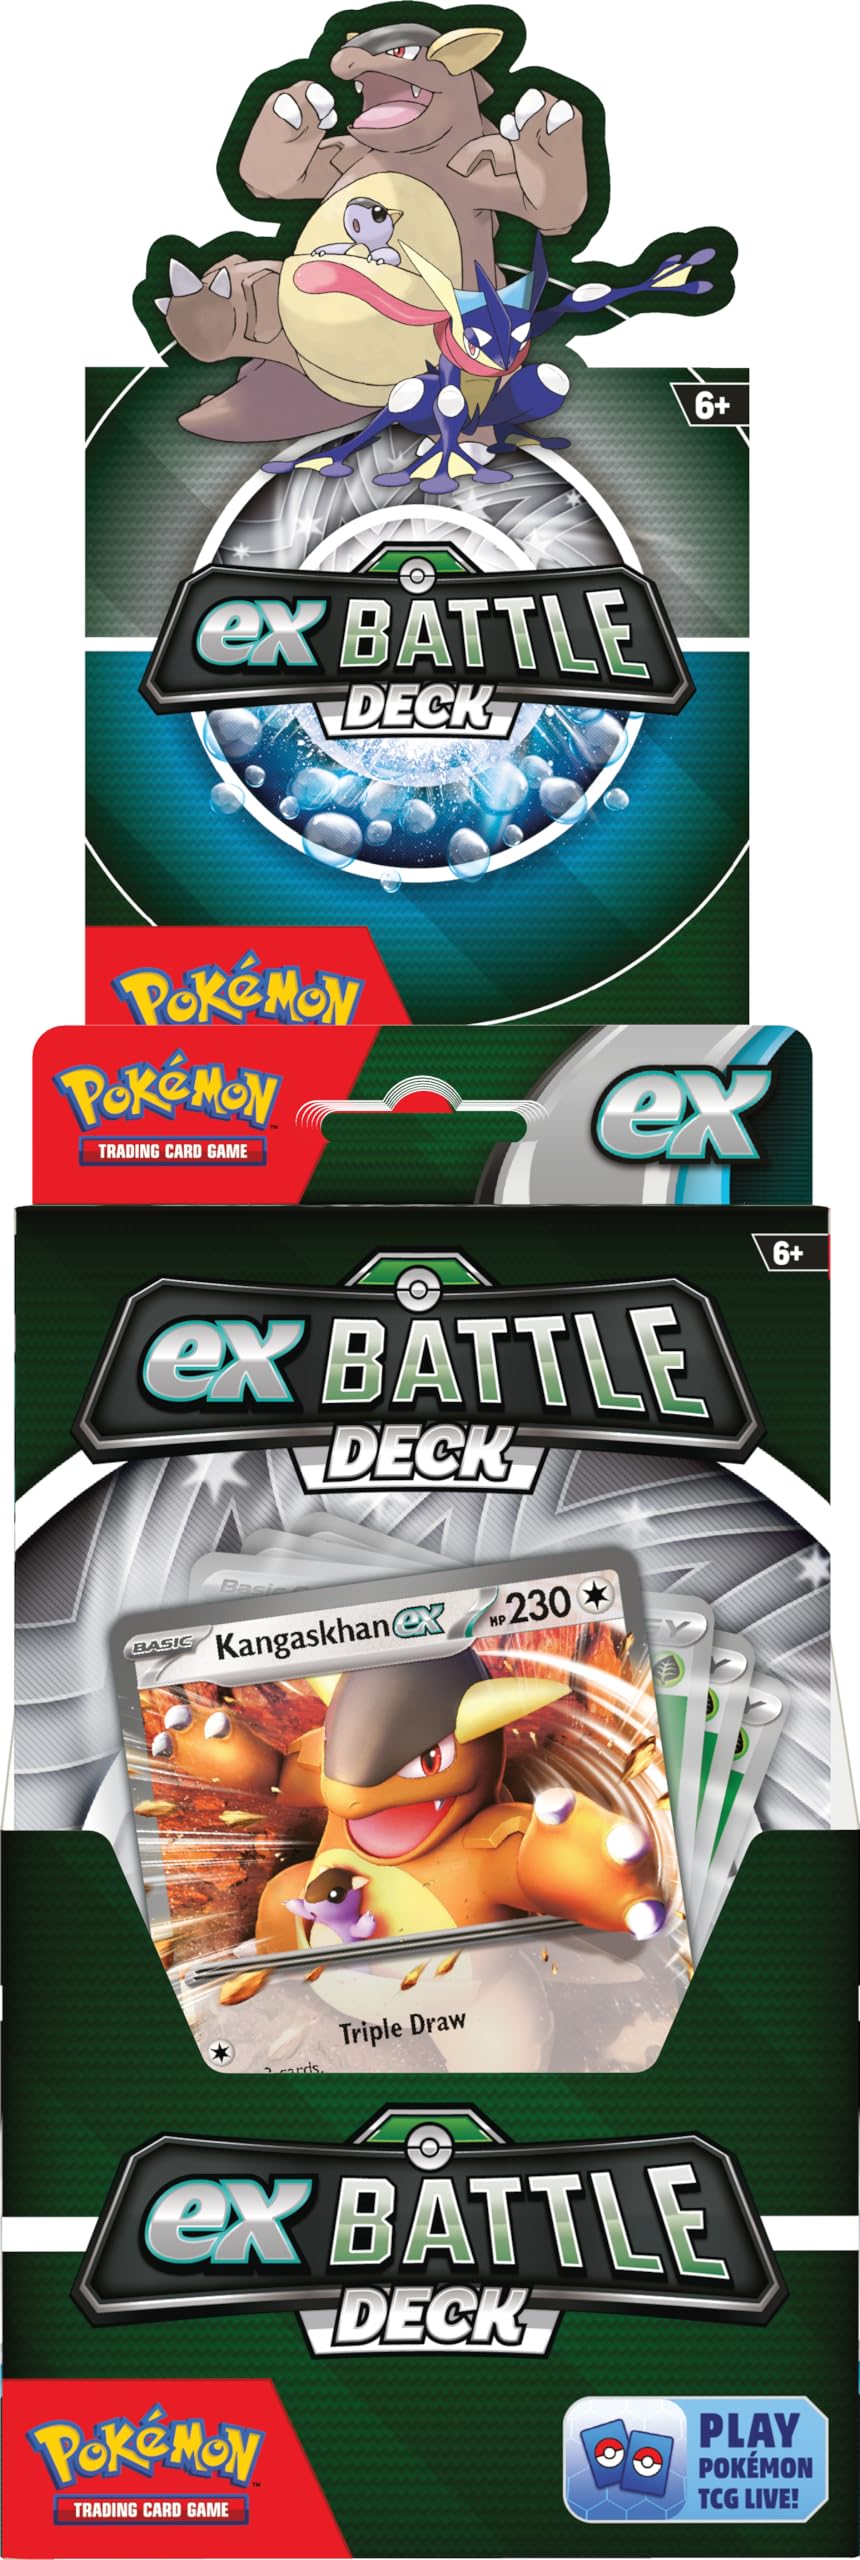 Pokémon Trading Card Game ex Battle Decks - C